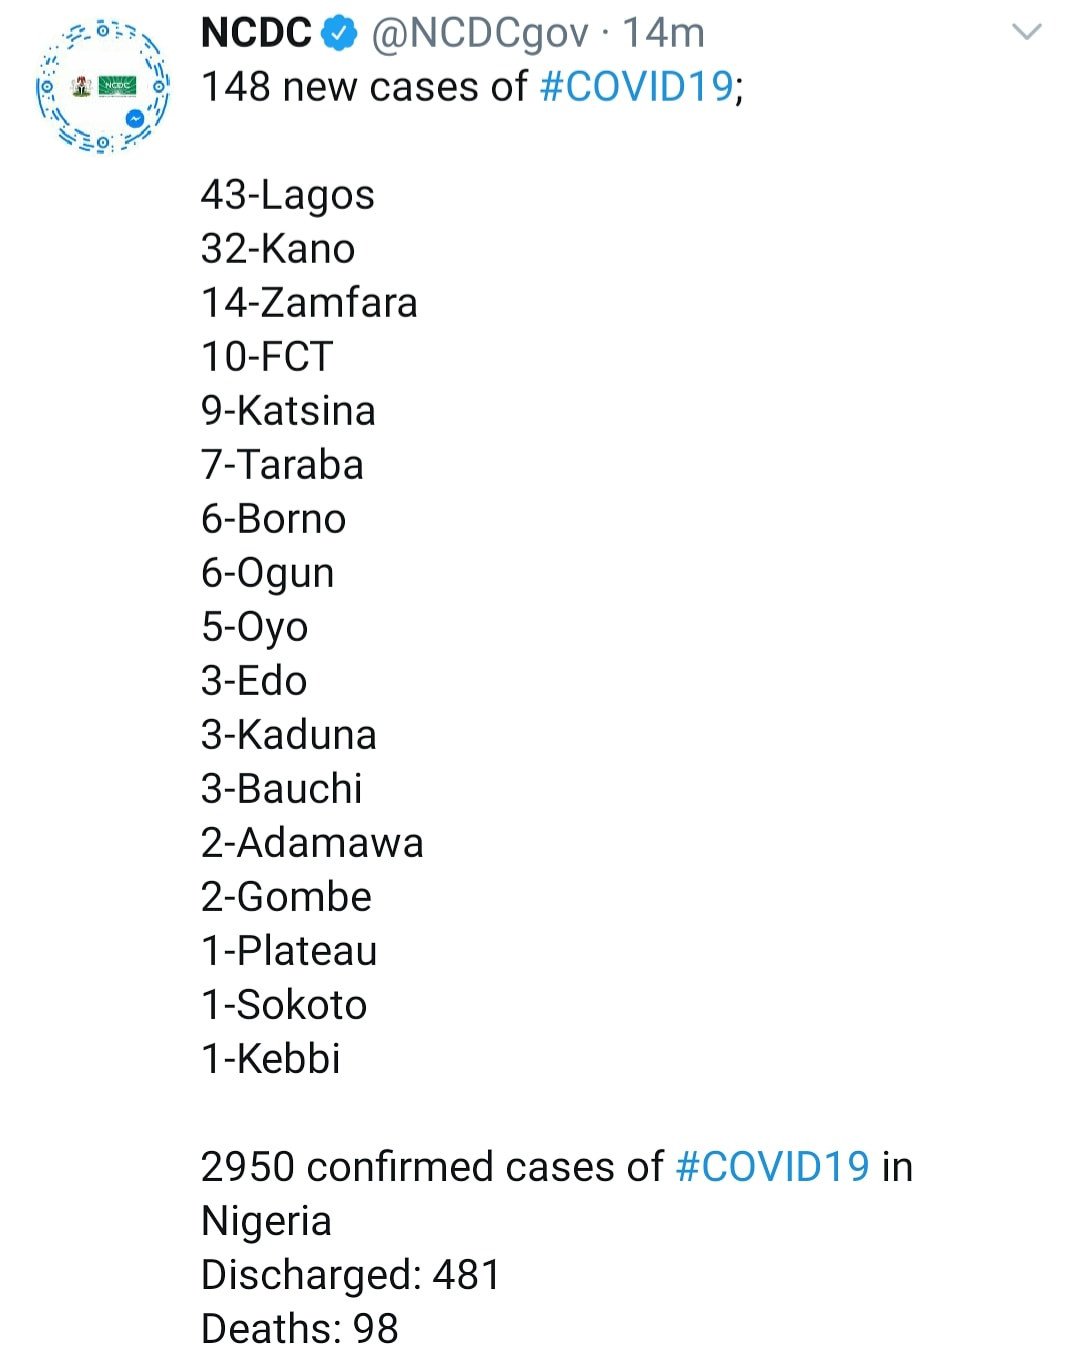 148 new cases of COVID-19 recorded in Nigeria